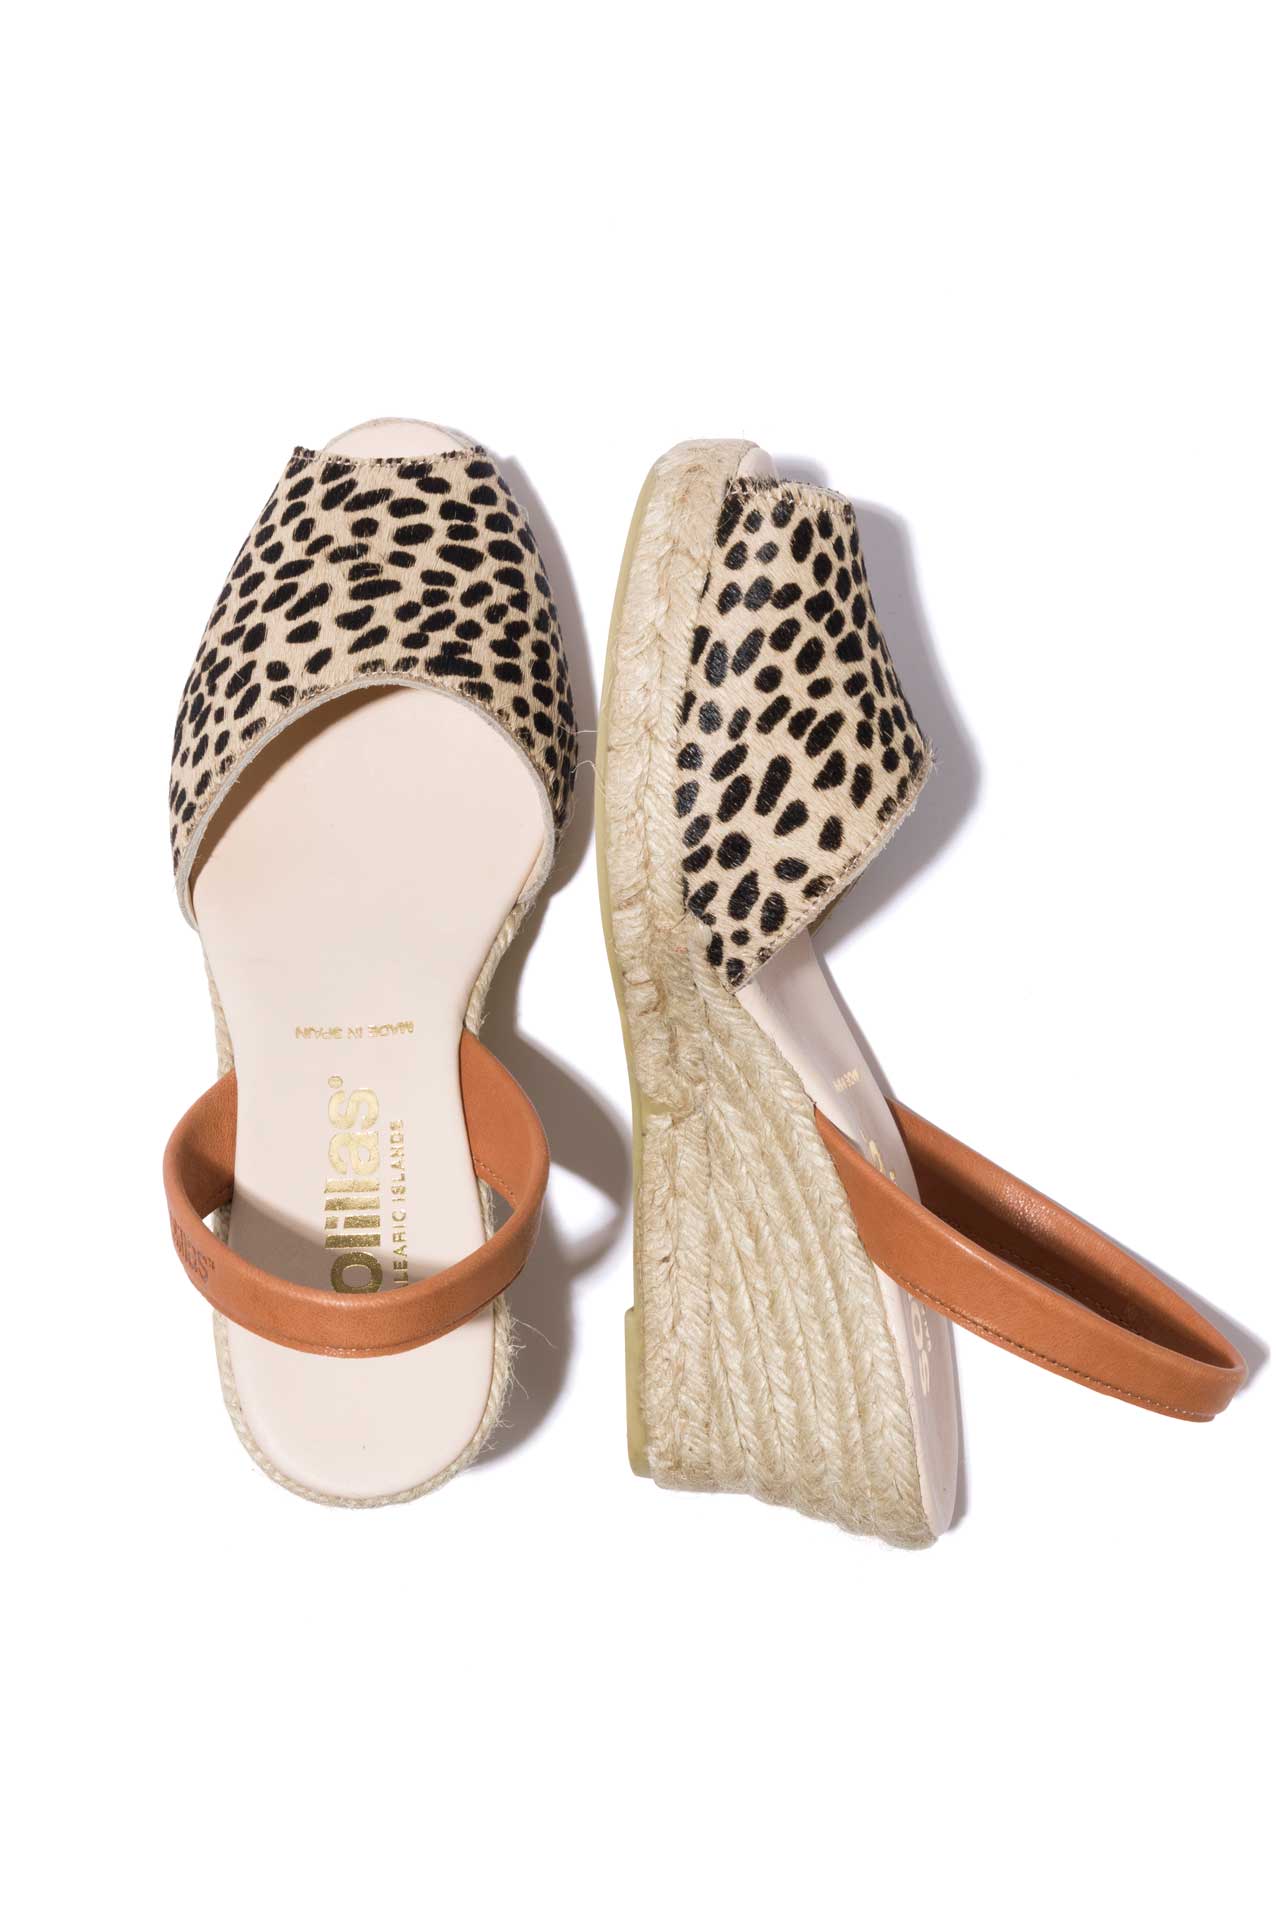 LEOPARDO LALIA - Espadrille Wedge Leopardo Print Fur Menorcan Sandals